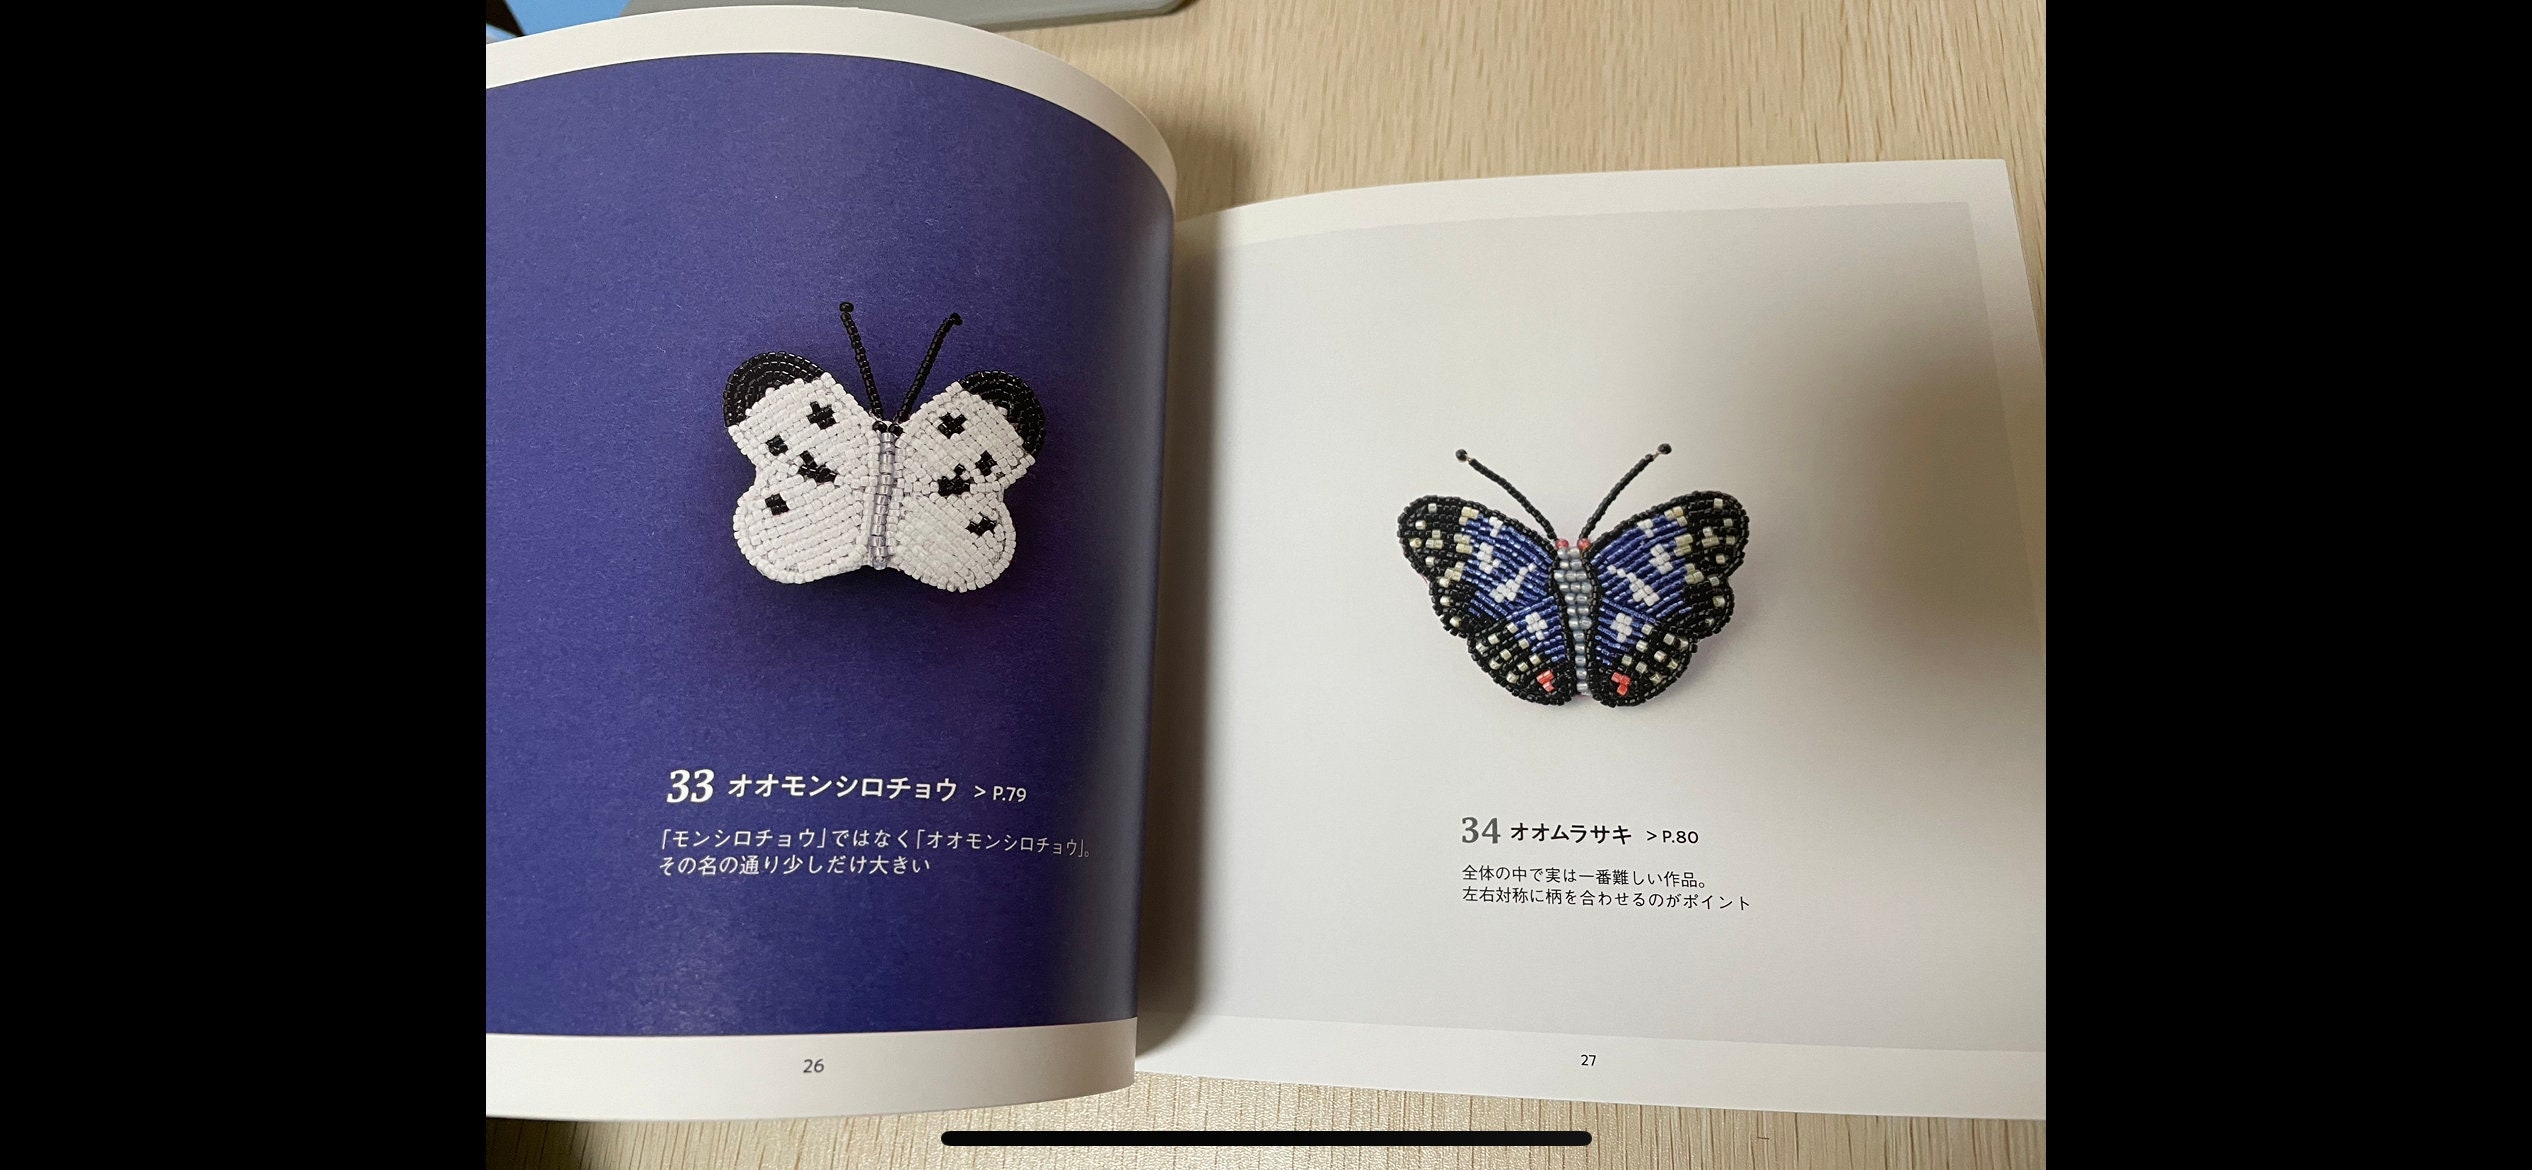 Cute and Round Beaded Animal Motifs Japanese Bead Book Japan Magazine